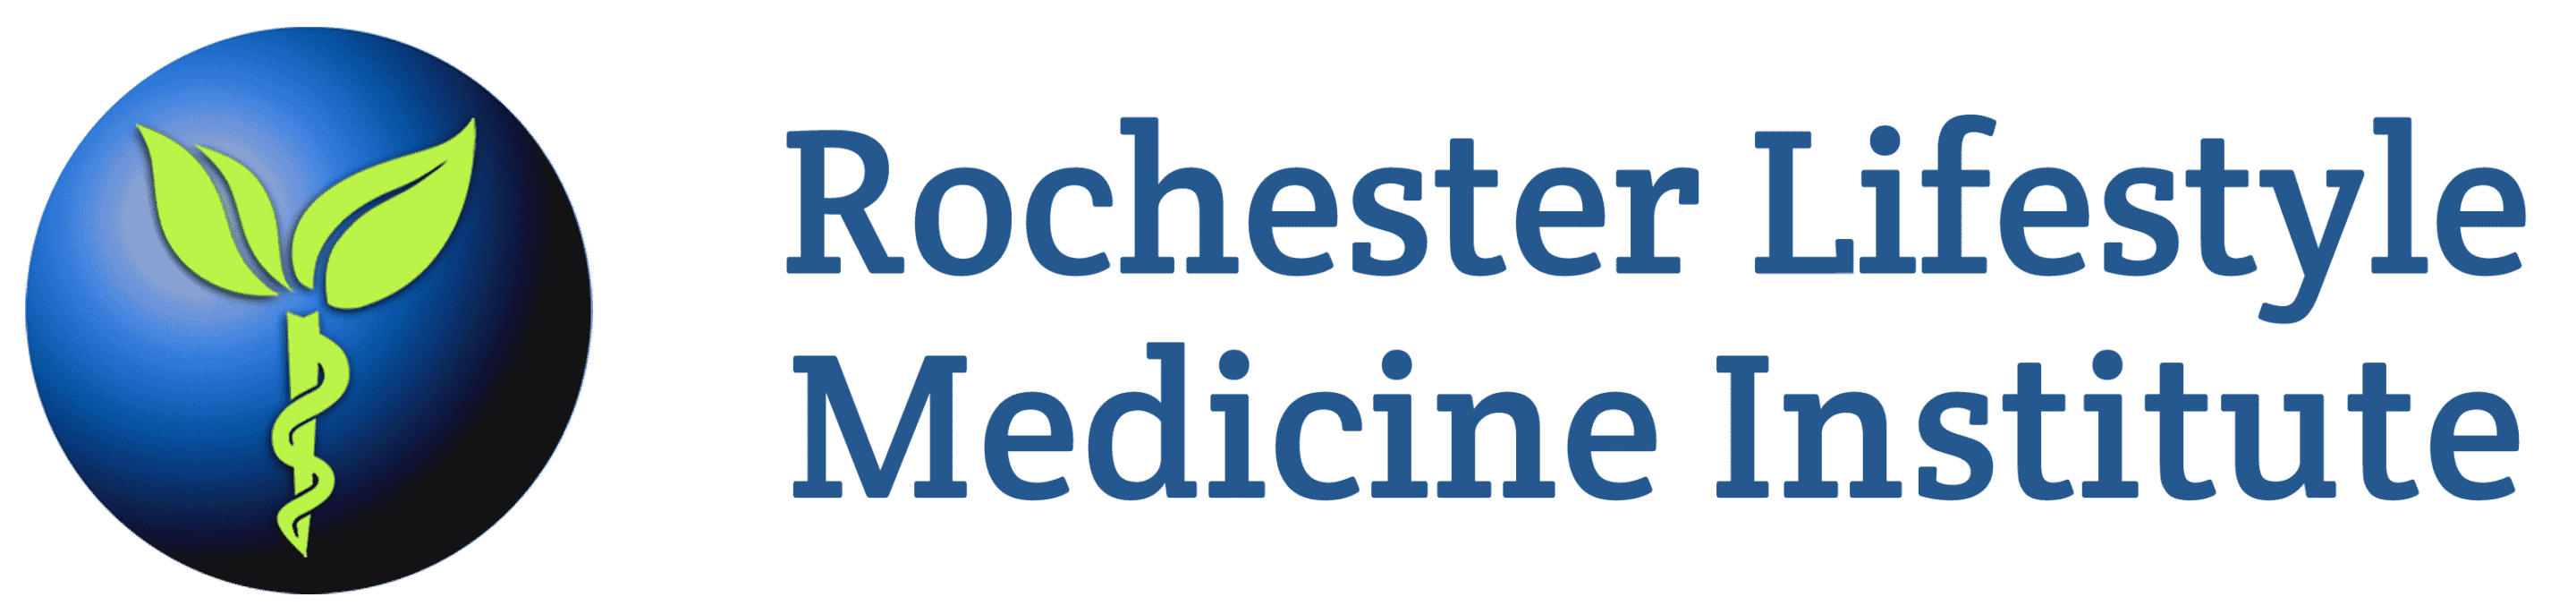 Logo Rochester Lifestyle Medicine Institute